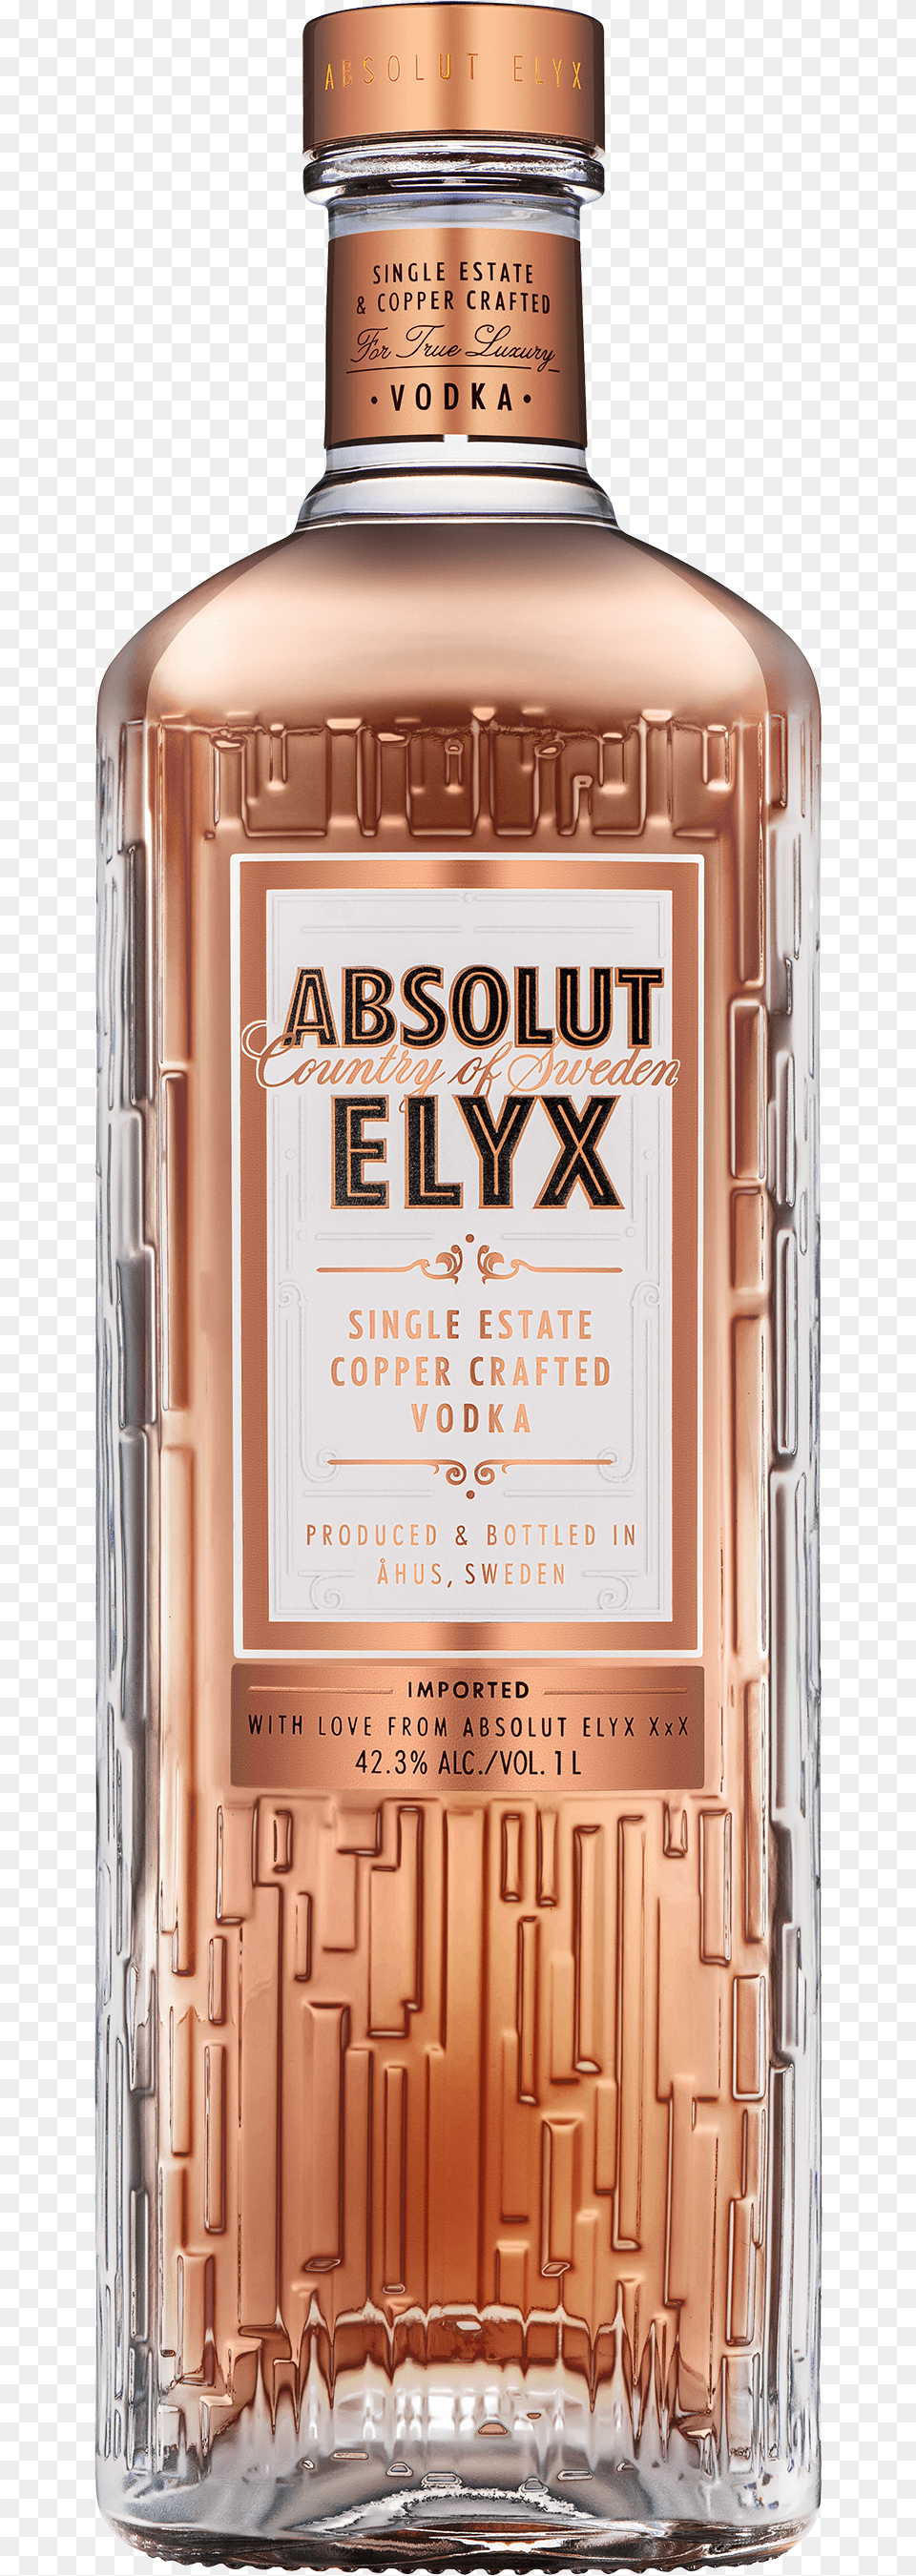 Image Absolut Elyx New Bottle, Alcohol, Beverage, Liquor, Cosmetics Free Transparent Png